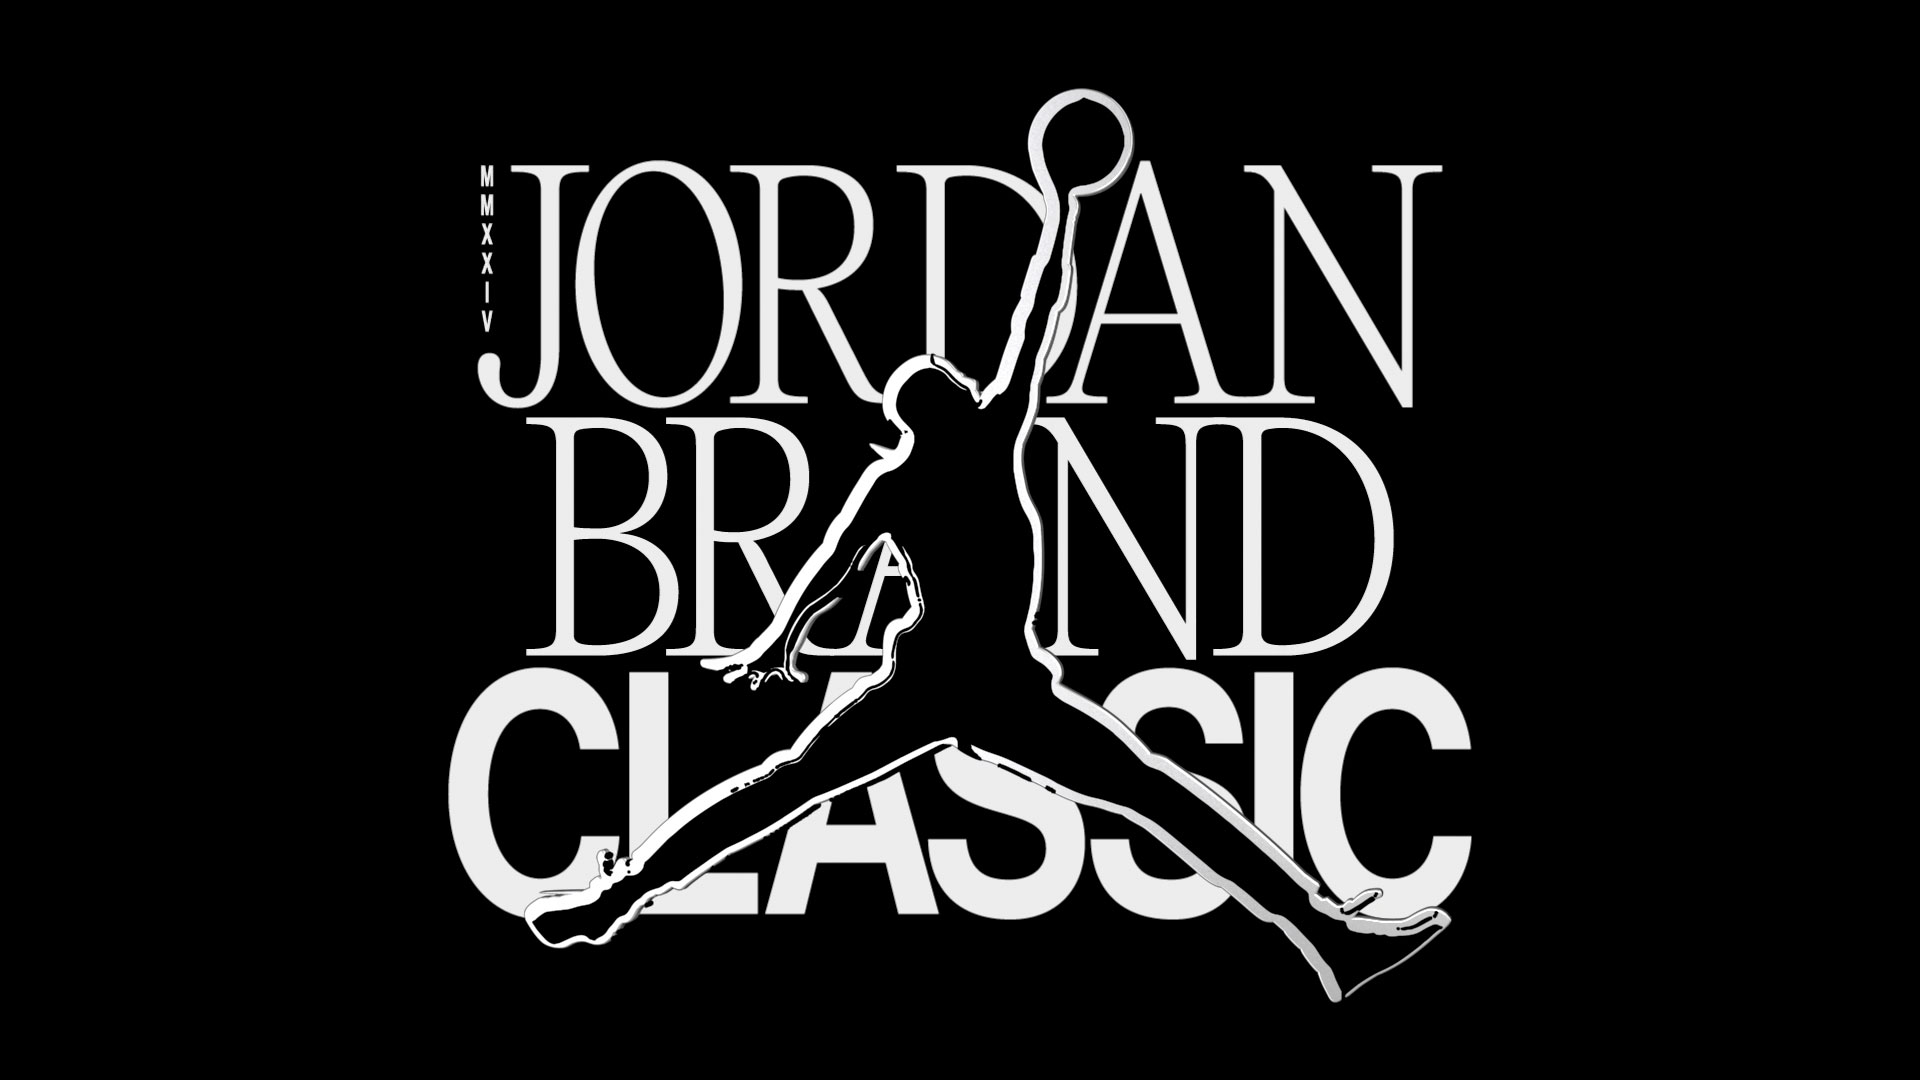 Jordan Brand Classic